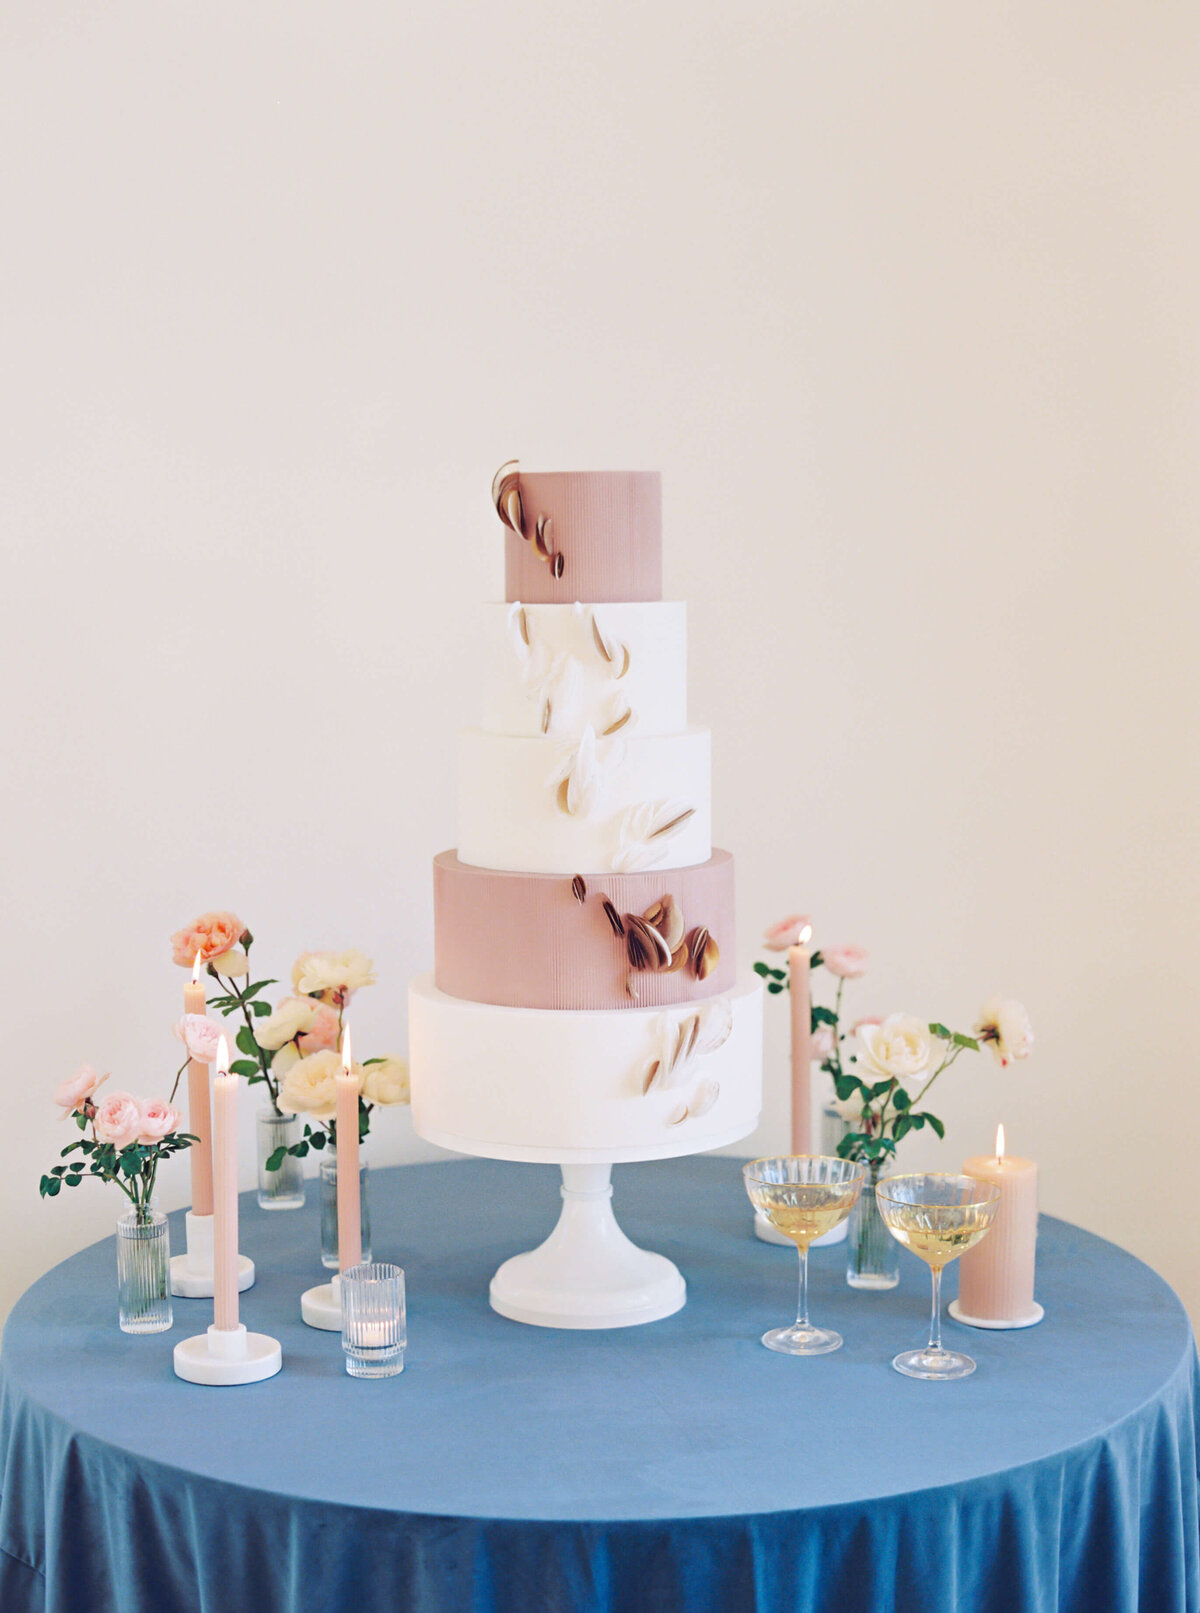 Five tier white and mauve wedding cake